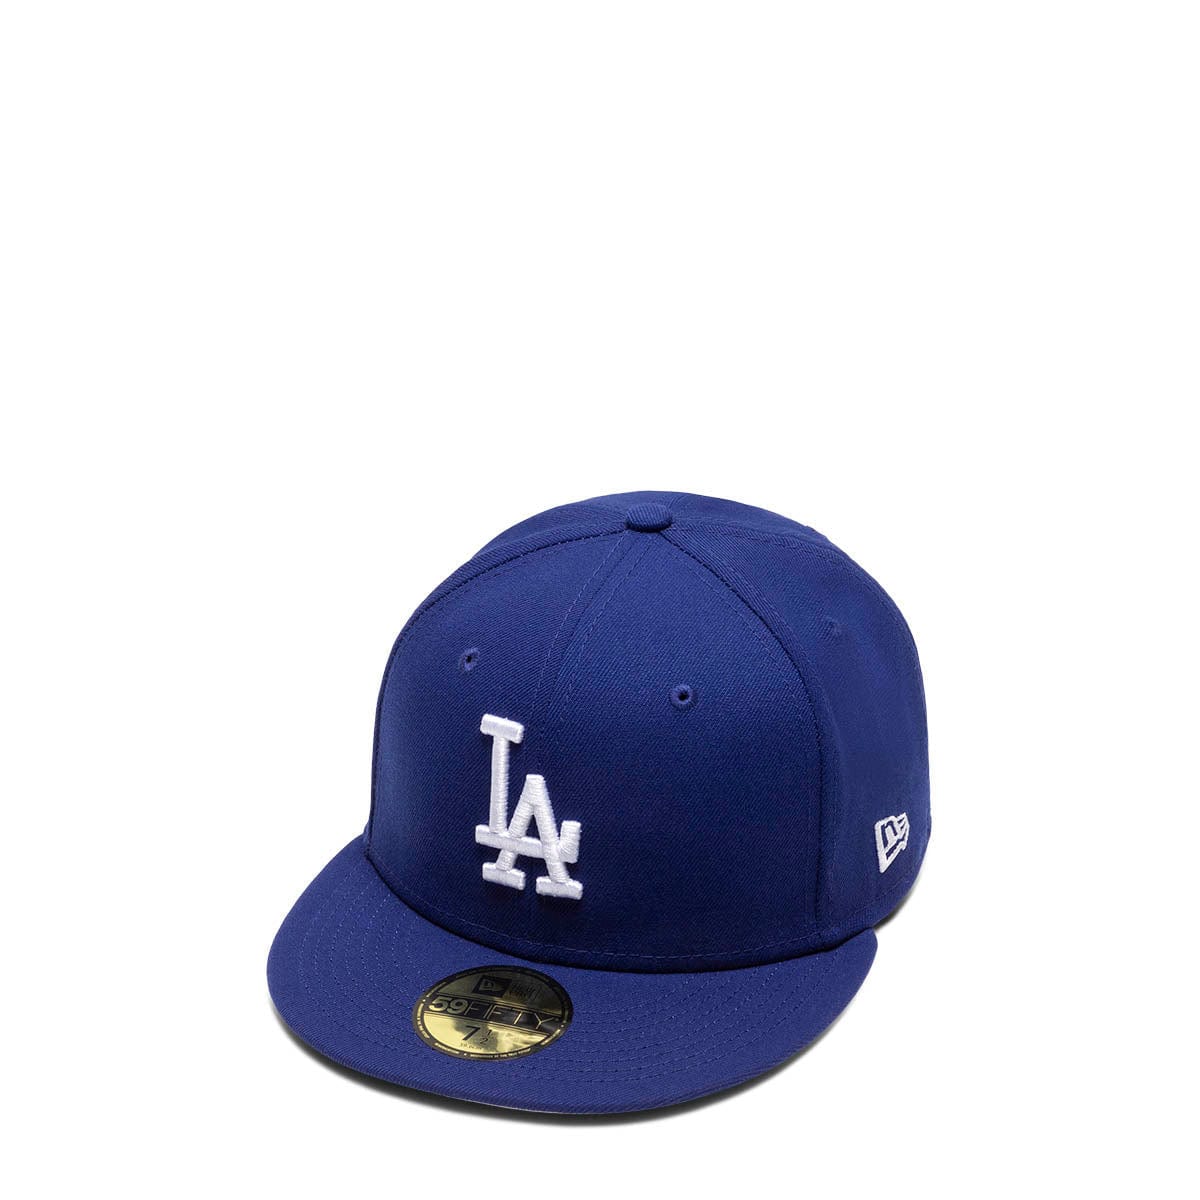 MLB L.A. DODGERS NEW ERA 9FIFTY SNAPBACK HAT, SIZE OS